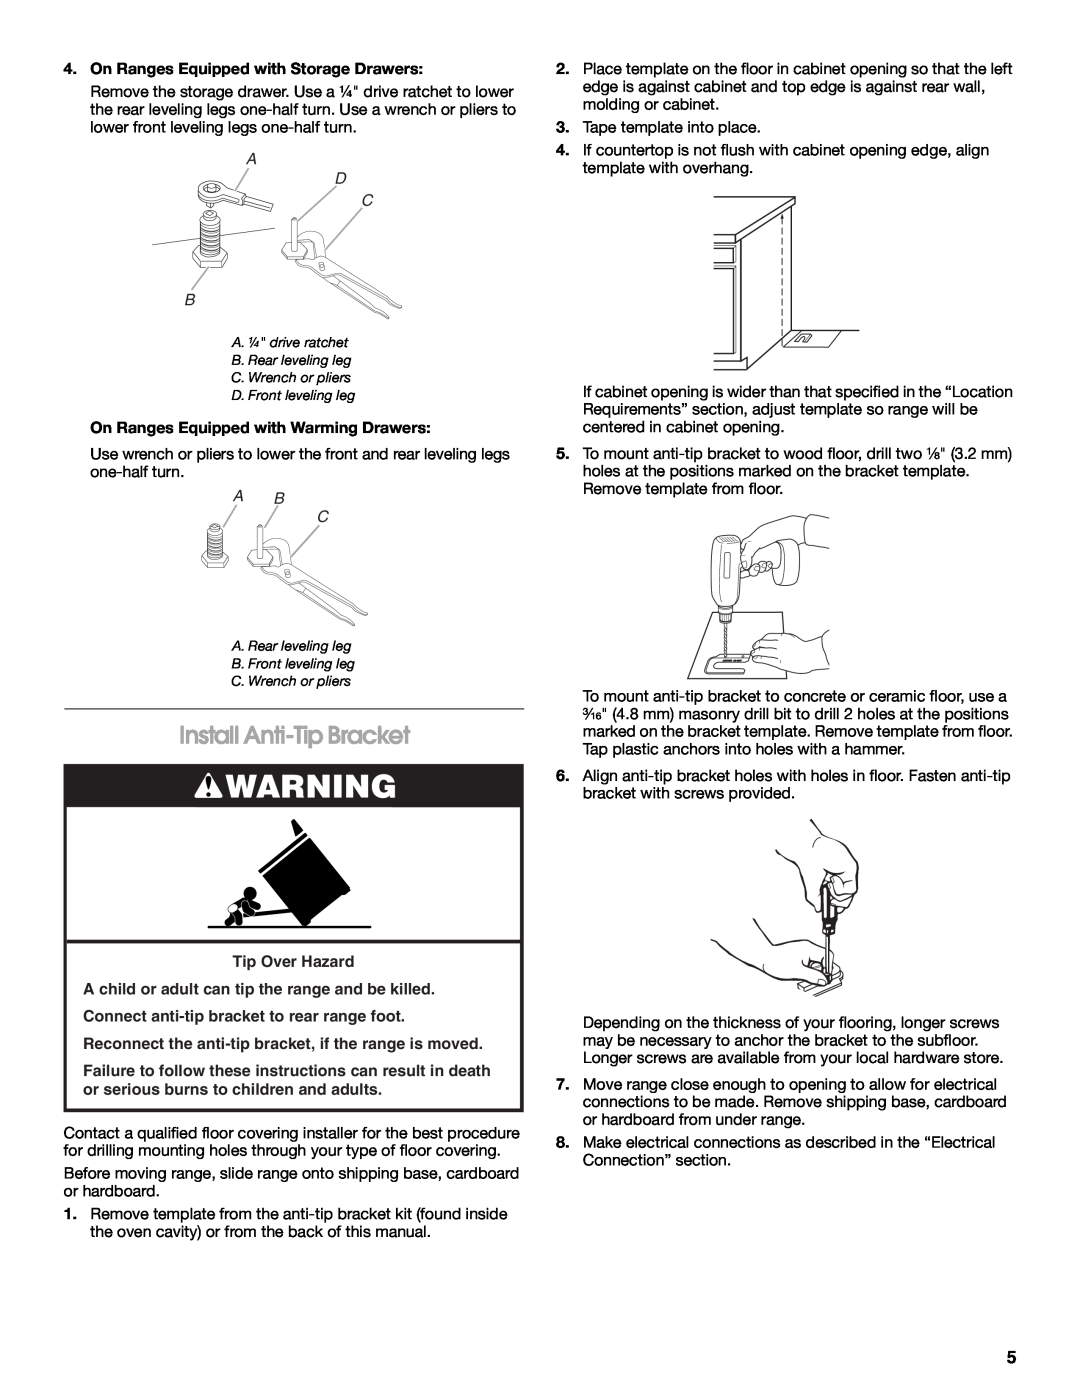 Amana W10196158B Install Anti-Tip Bracket, A D C B, A B C, Connect anti-tip bracket to rear range foot 